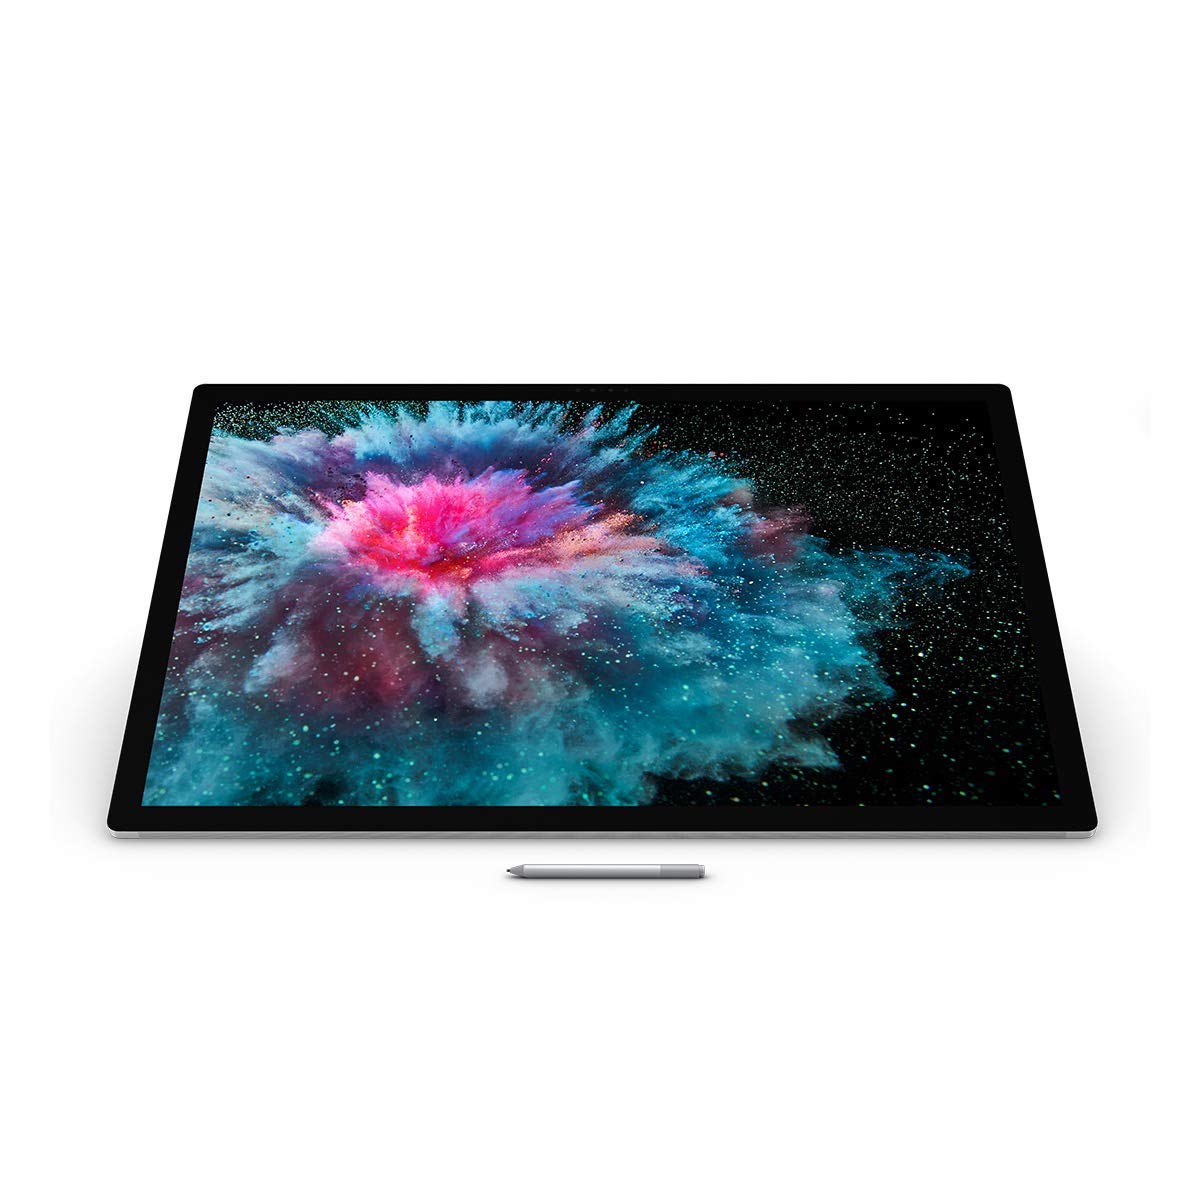 Microsoft Surface Studio 2 (Intel Core i7, 32GB RAM, 1TB) - Newest Version (Renewed)